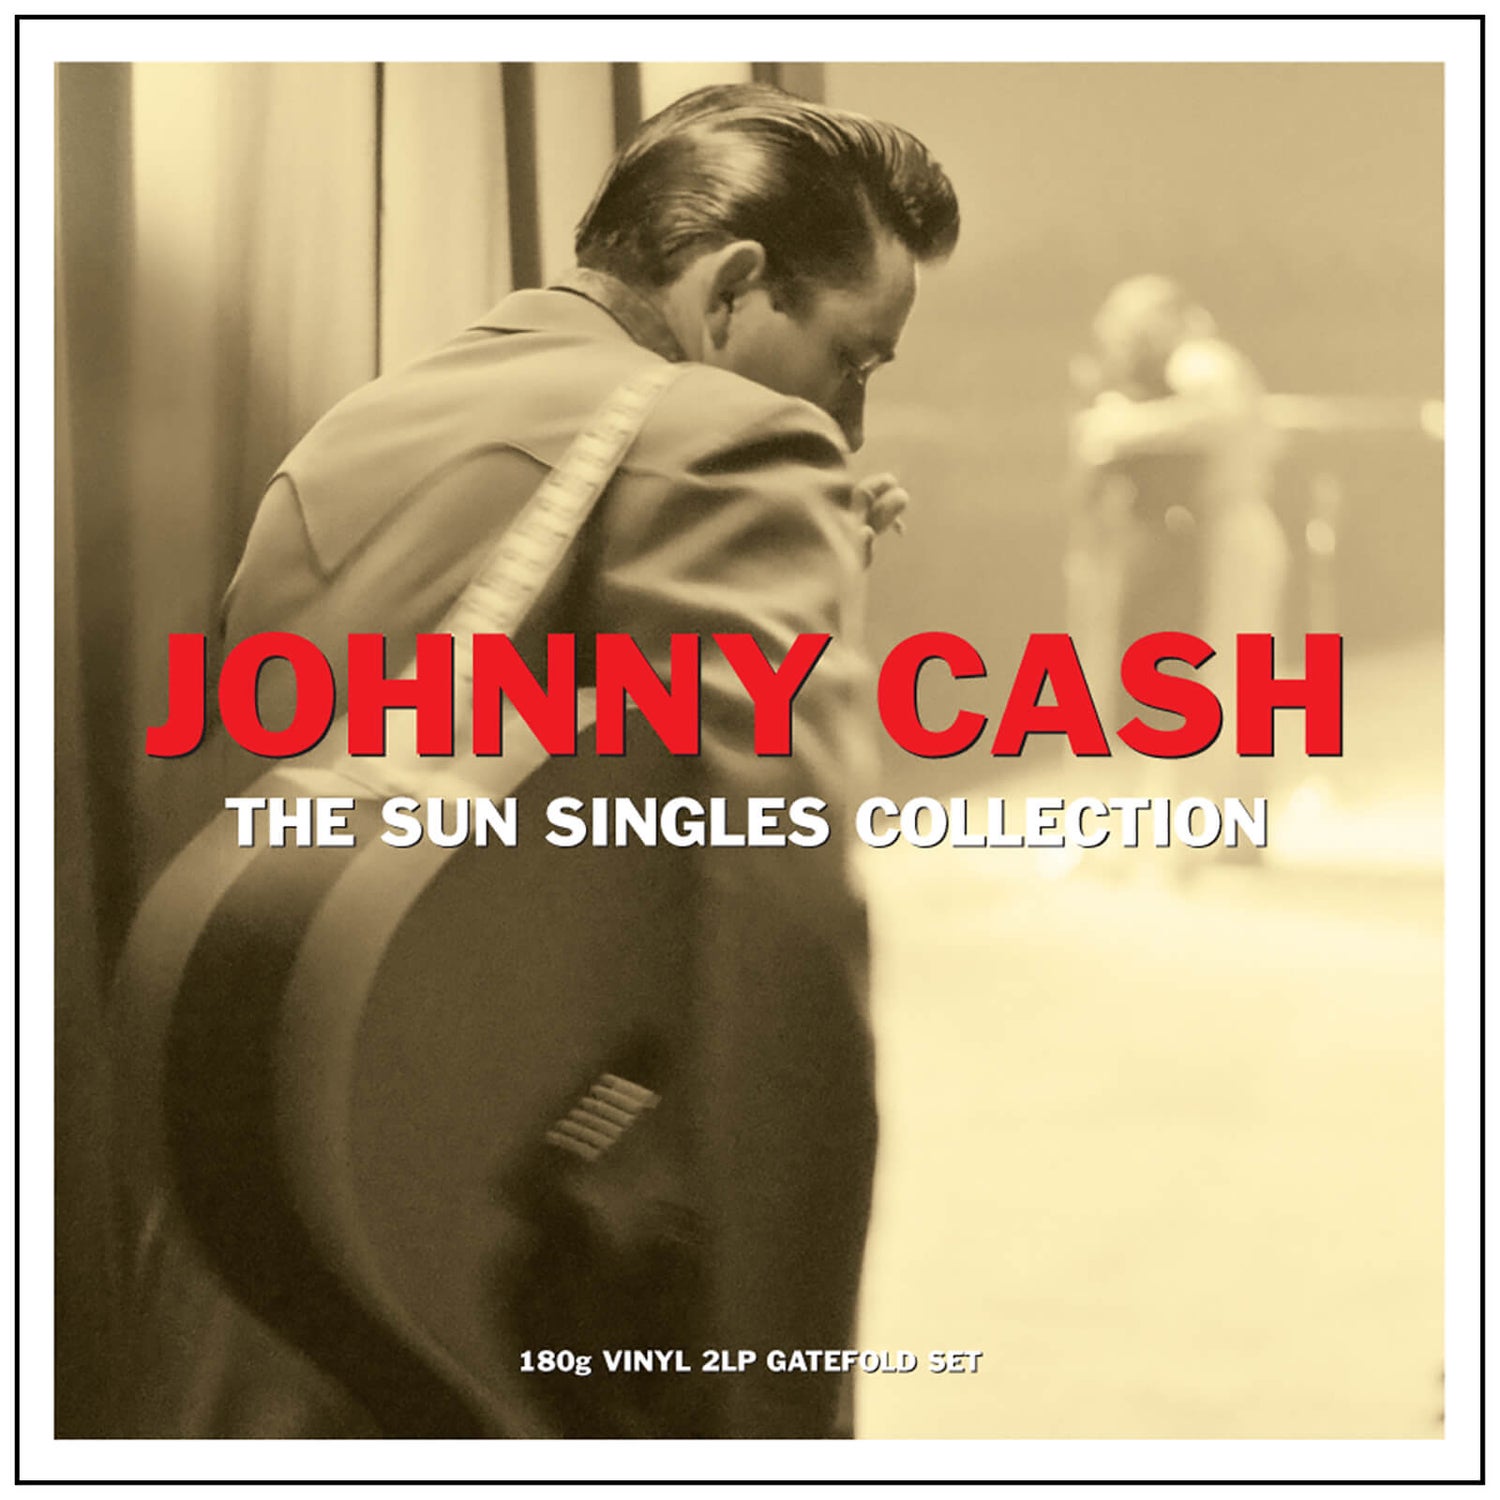 Johnny Cash - The Sun Singles Collection2LP